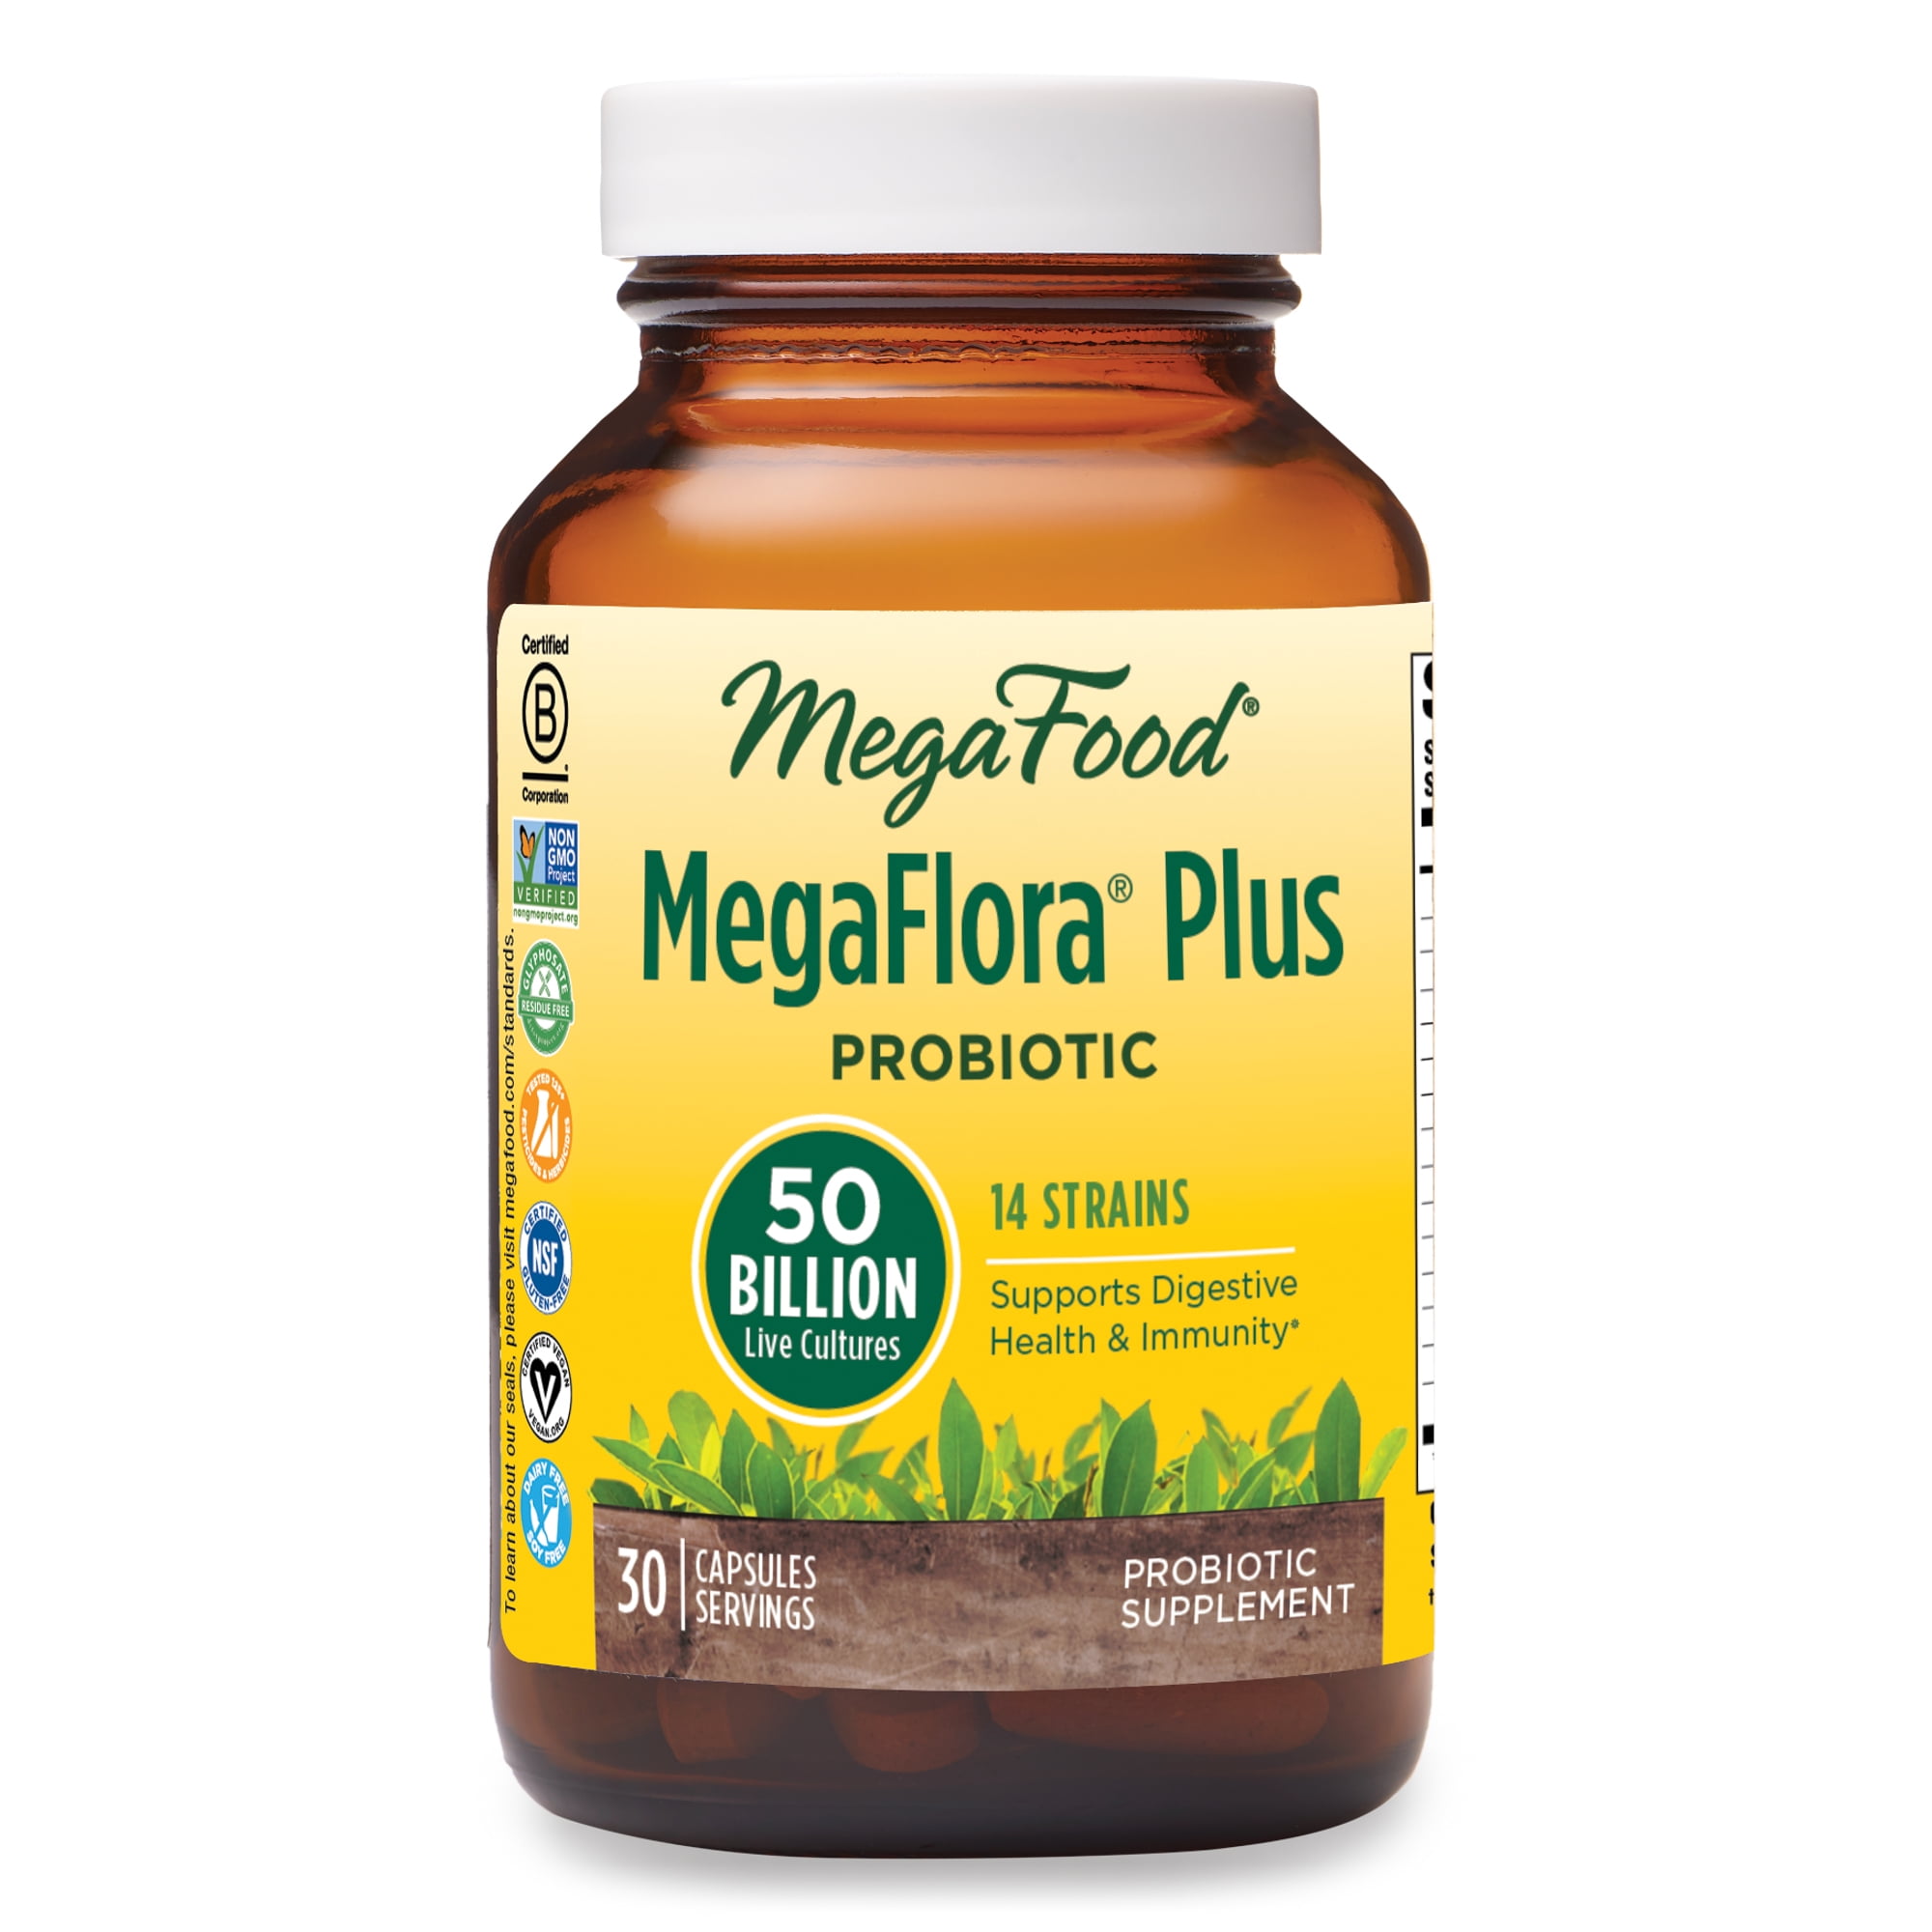 MegaFood MegaFlora Plus Probiotic Supplement with 50 